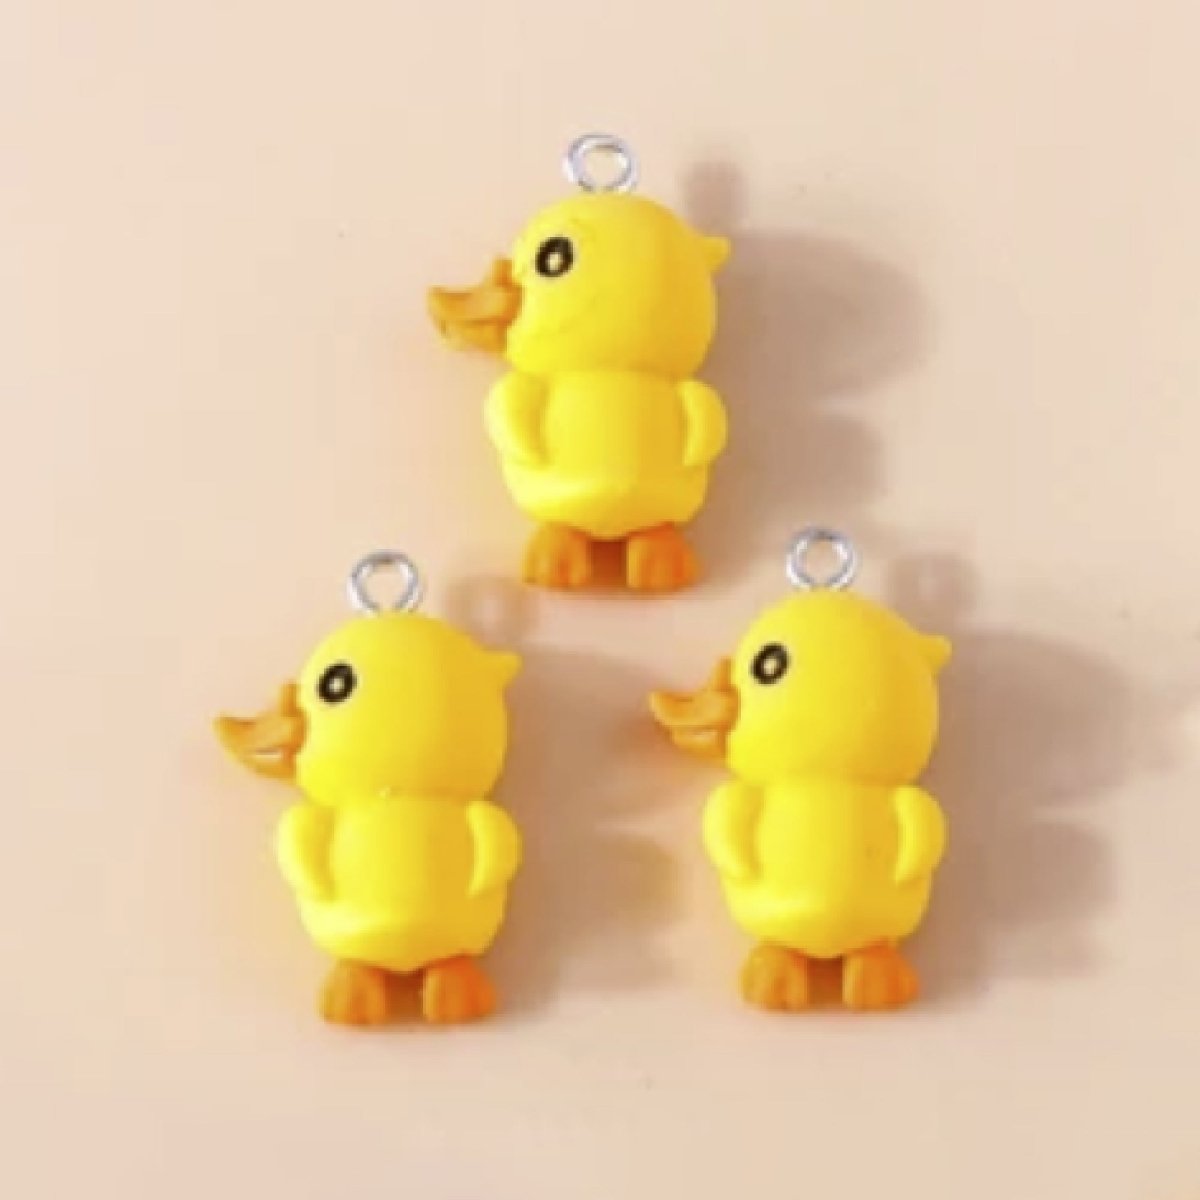 10pcs Miniature Mini Garden Animal Figurines Charms with Loop Pendant Craft - Flatback Yellow Ducks - Asia Sell